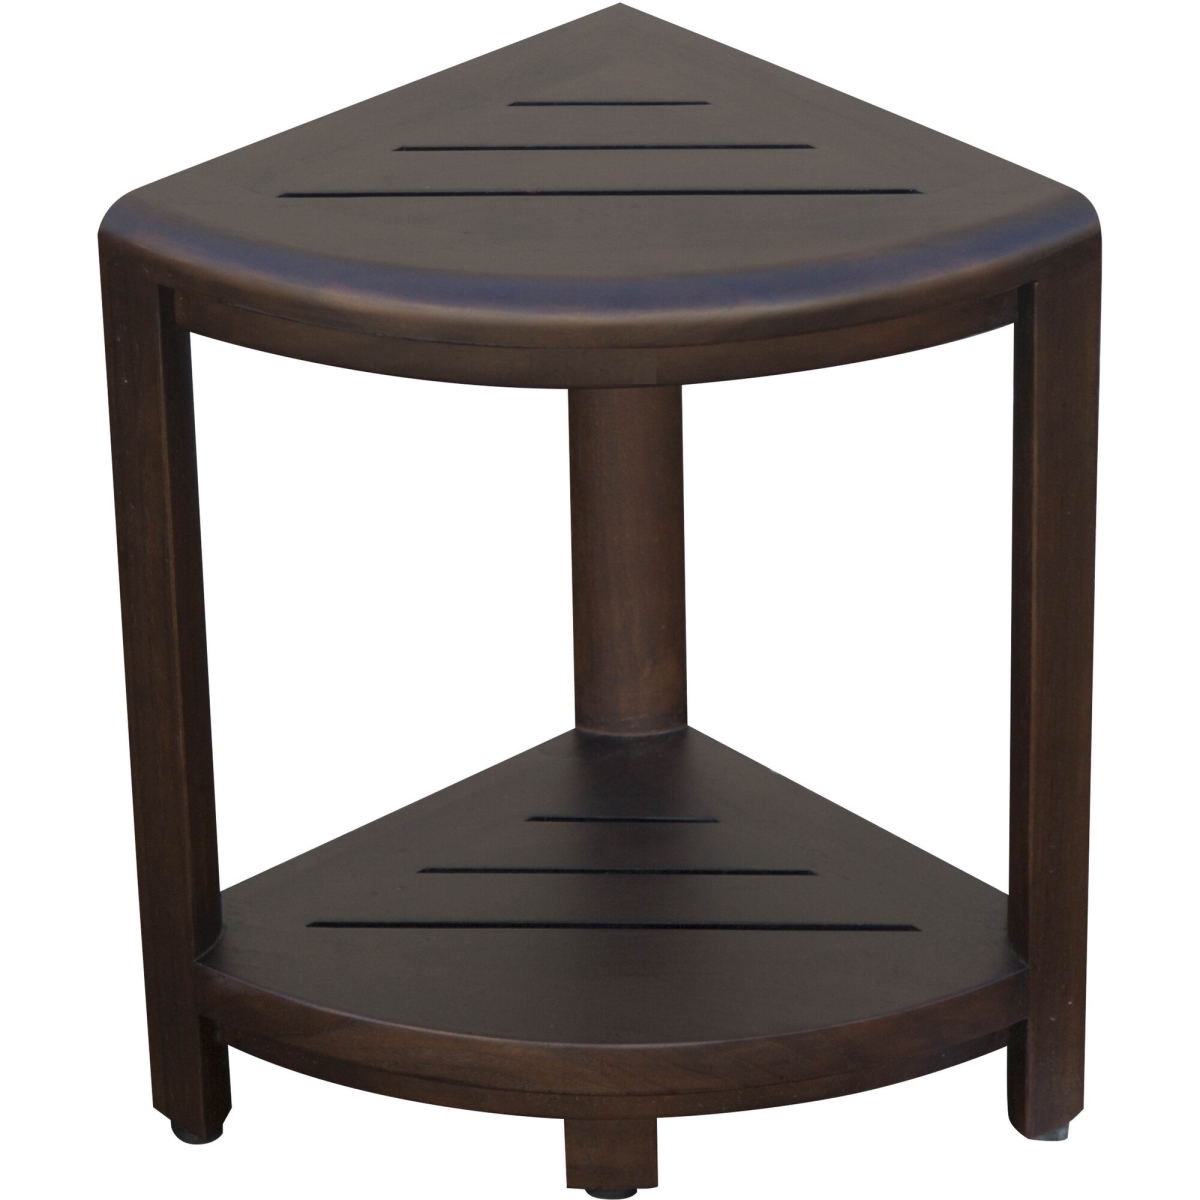 Picture of HomeRoots Furniture 376677 Compact Triangular Teak Shower Outdoor Bench with Shelf&#44; Dark Brown - 18 x 12 x 12 in.